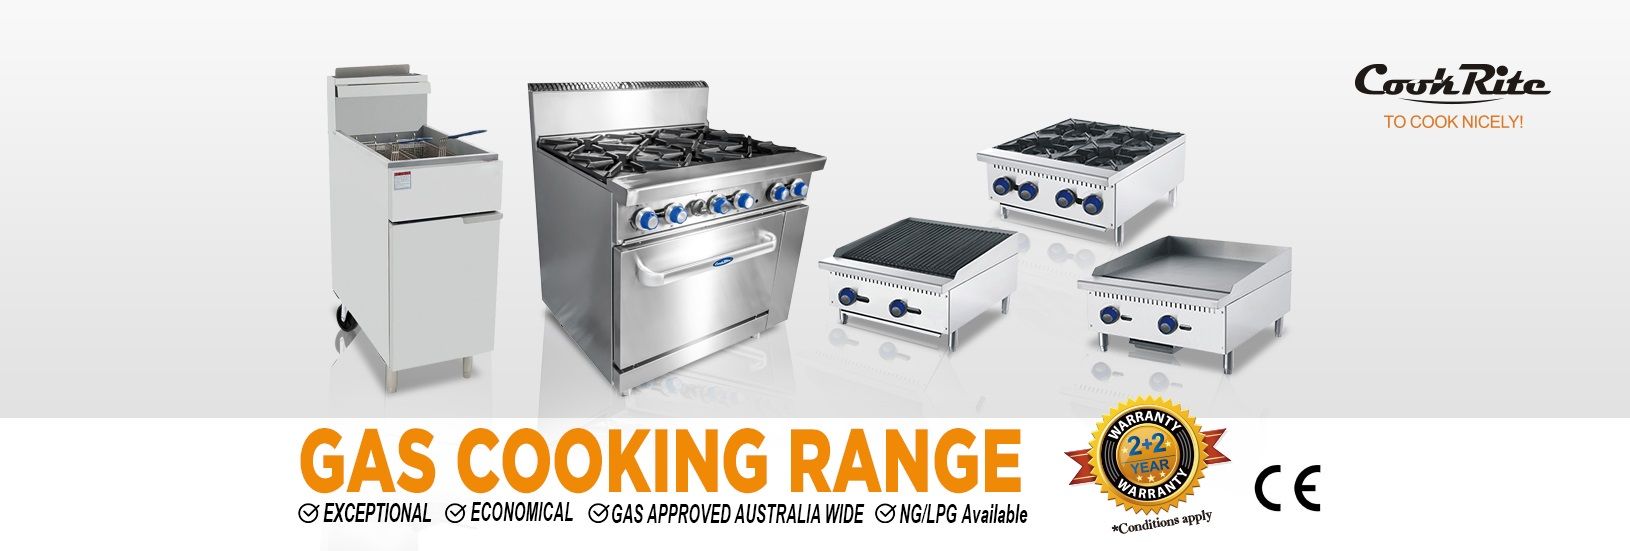 Commercial Kitchen Equipment Supplier In Melbourne, Sydney, Perth, BRI